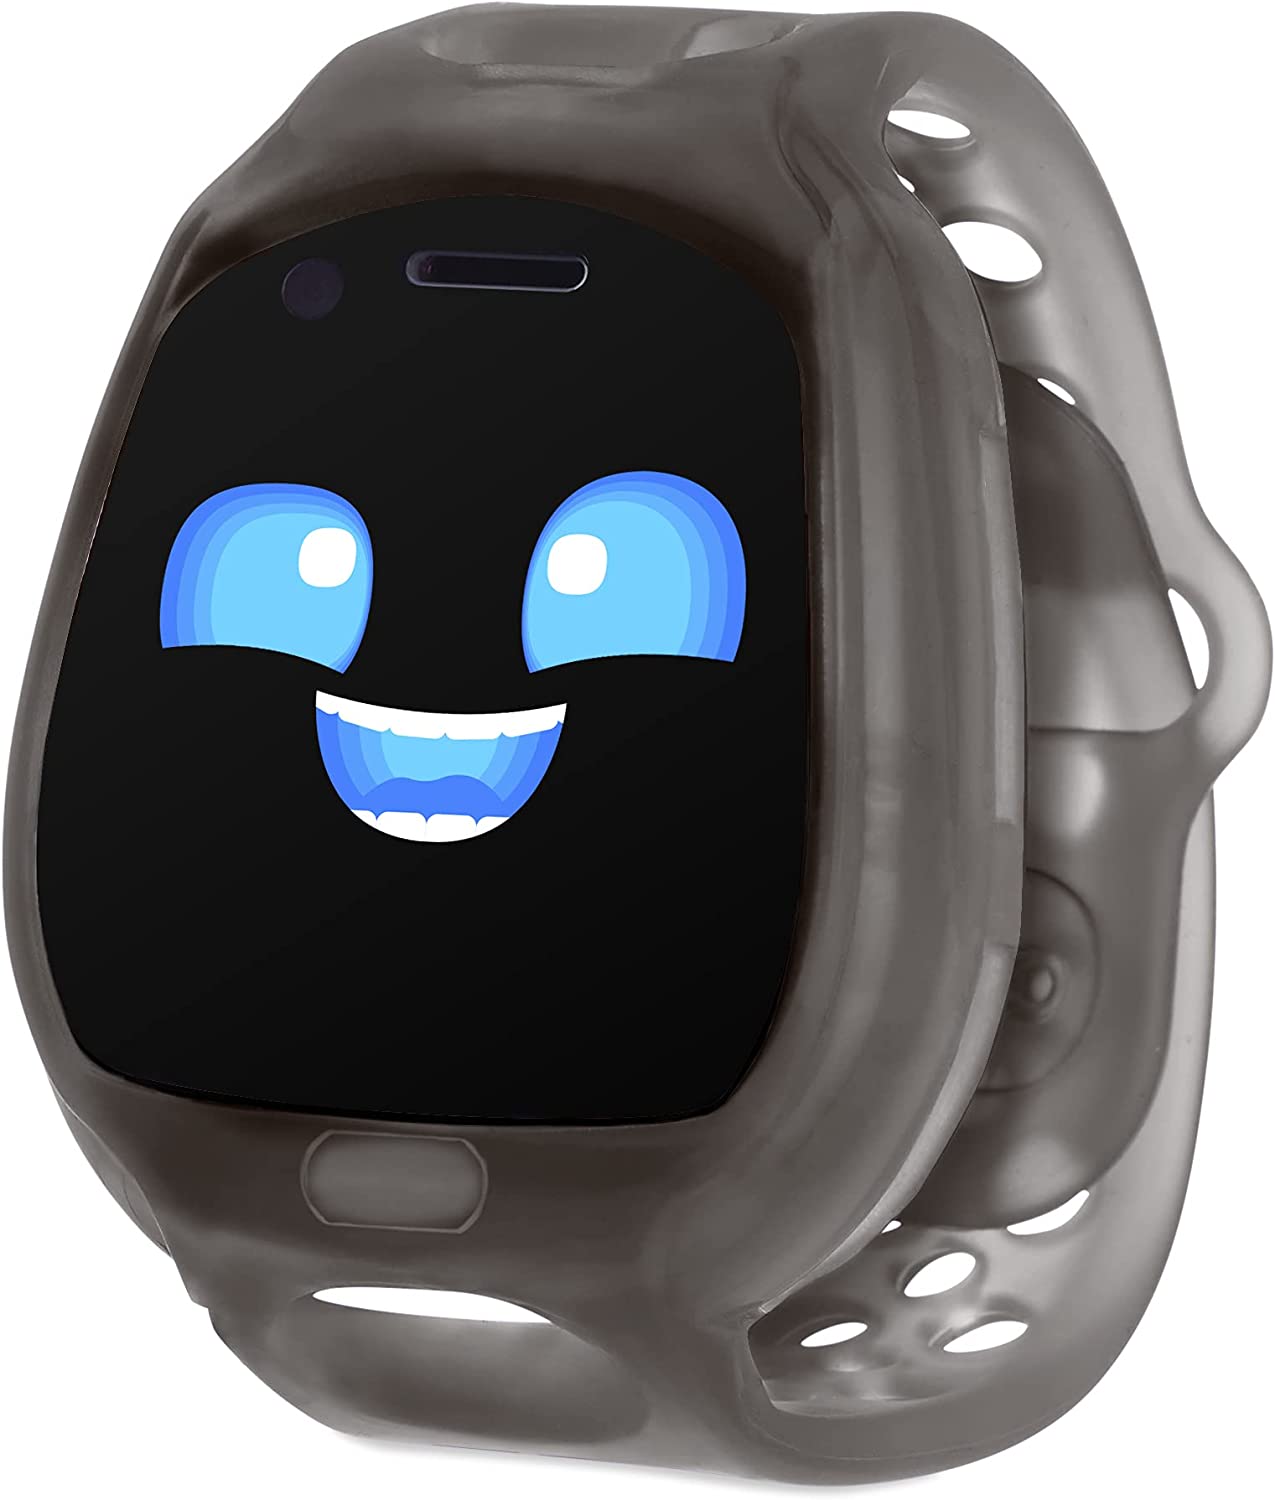 Little Tikes Tobi 2 Robot Smartwatch $20.36 + Free Shipping w/ Prime or $25+